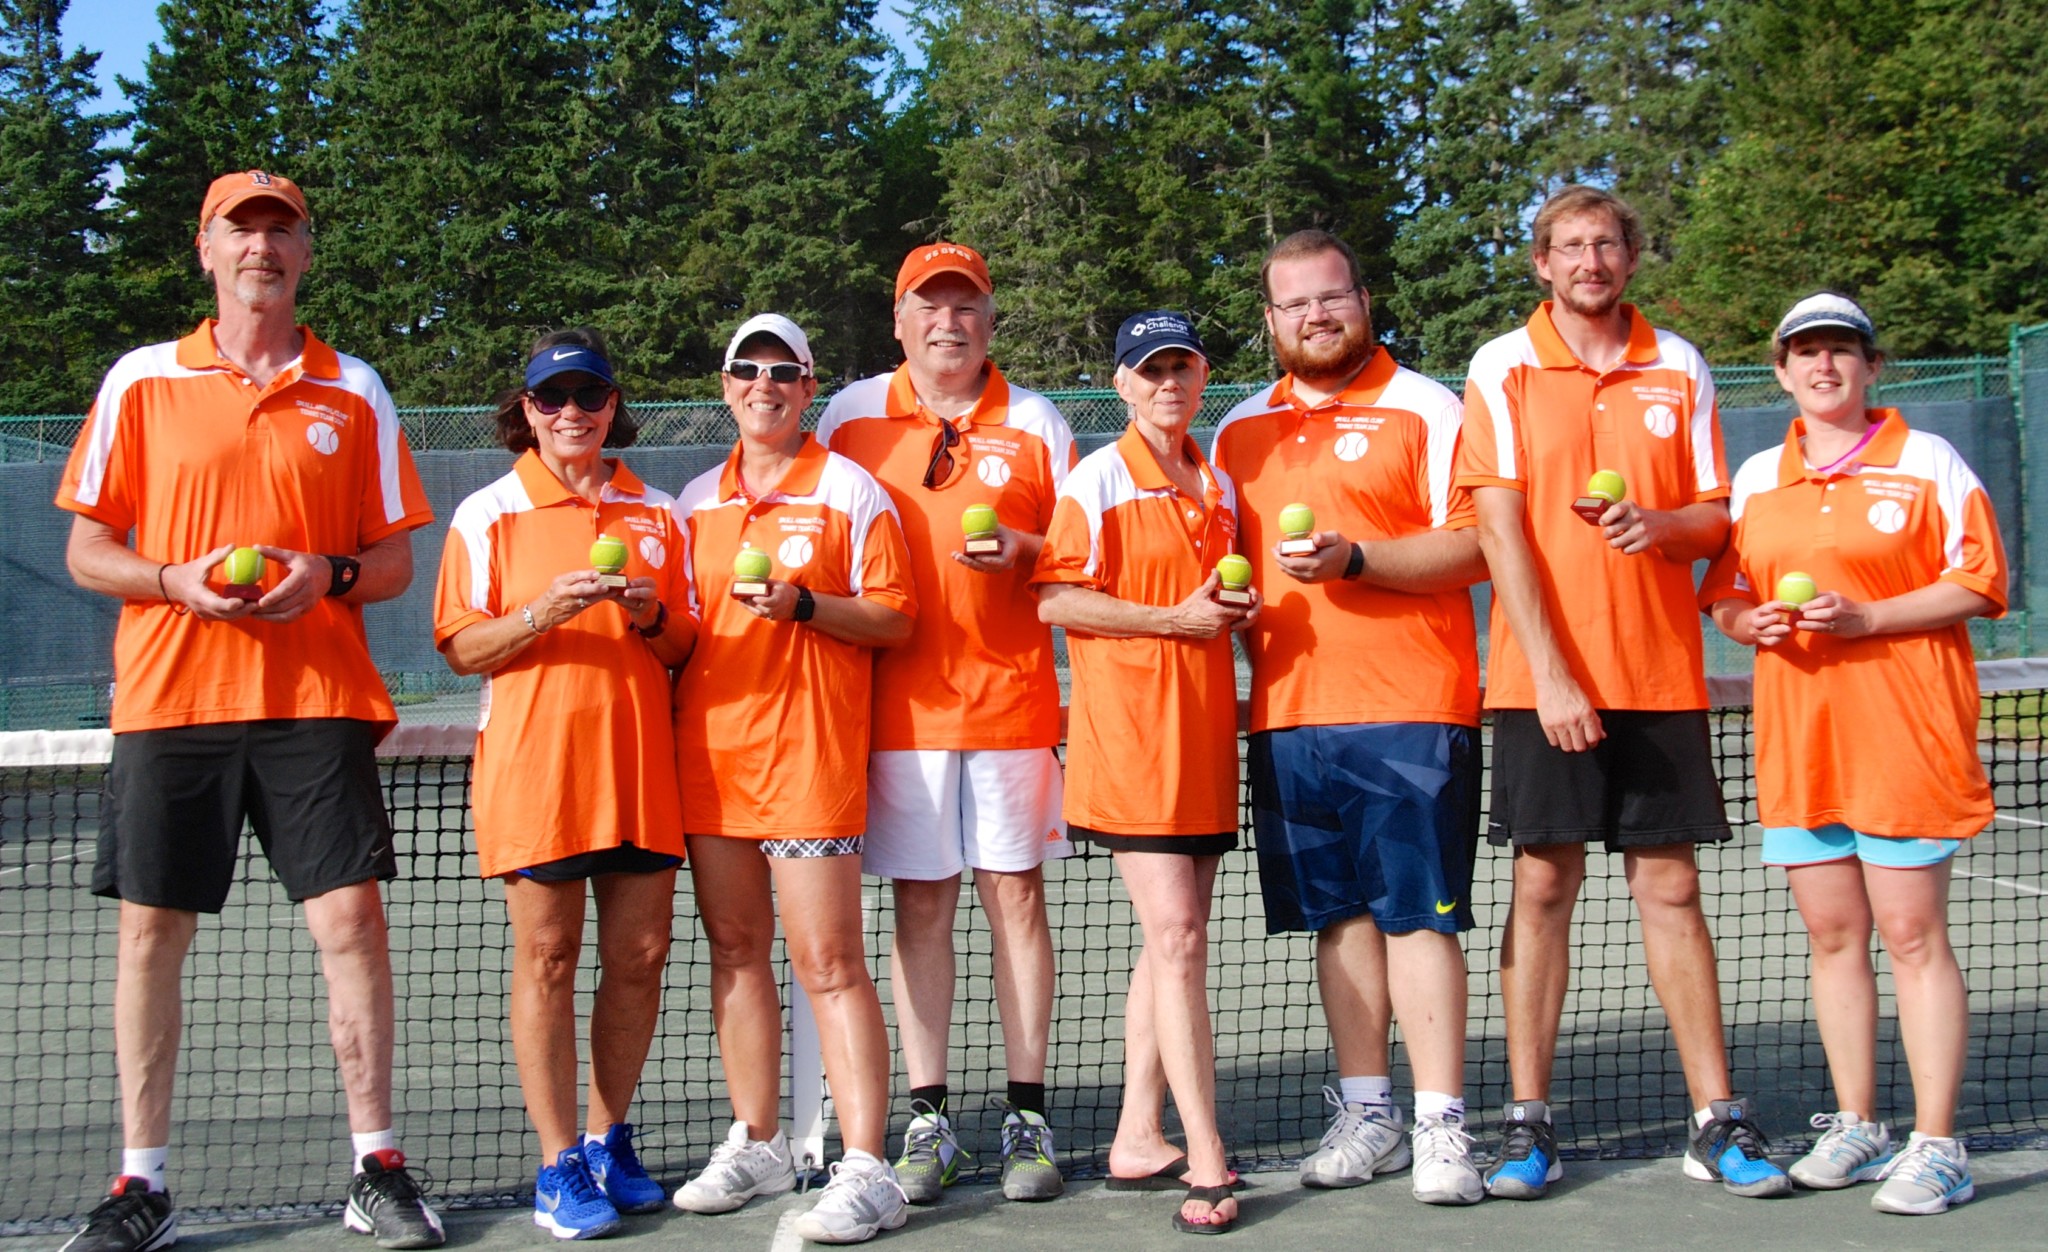 Small Animal Clinic Tennis Tournament Winners